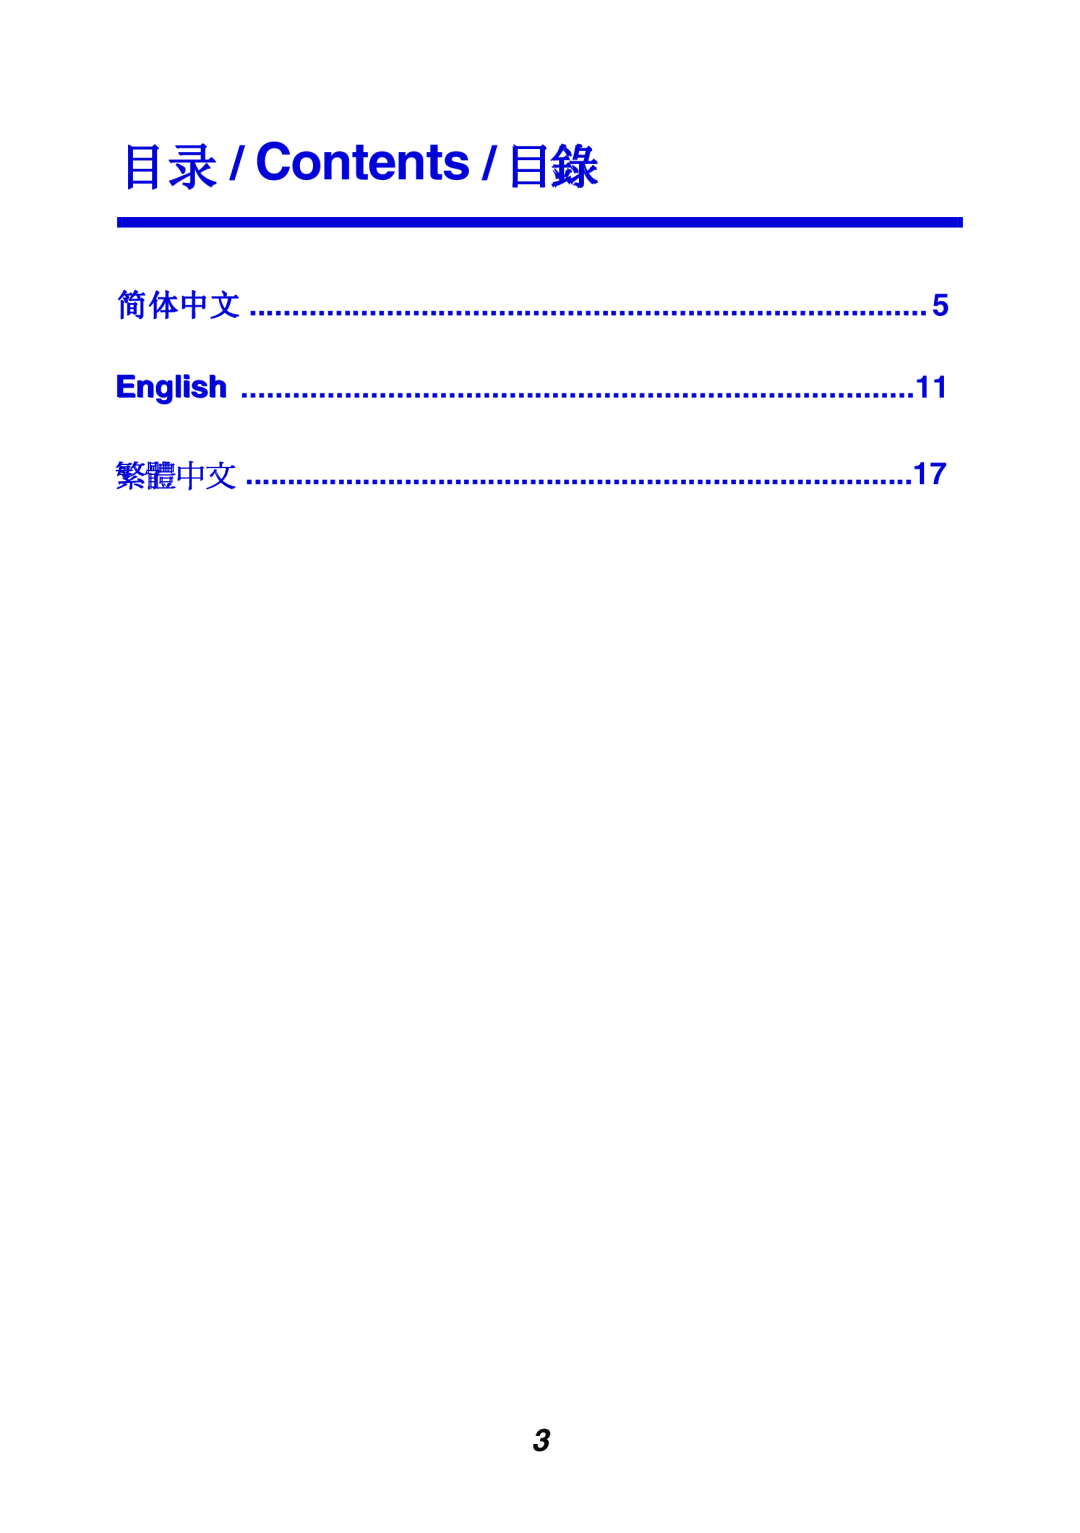 Lexmark 810 Series manual Contents / 目錄, English, 繁體中文 